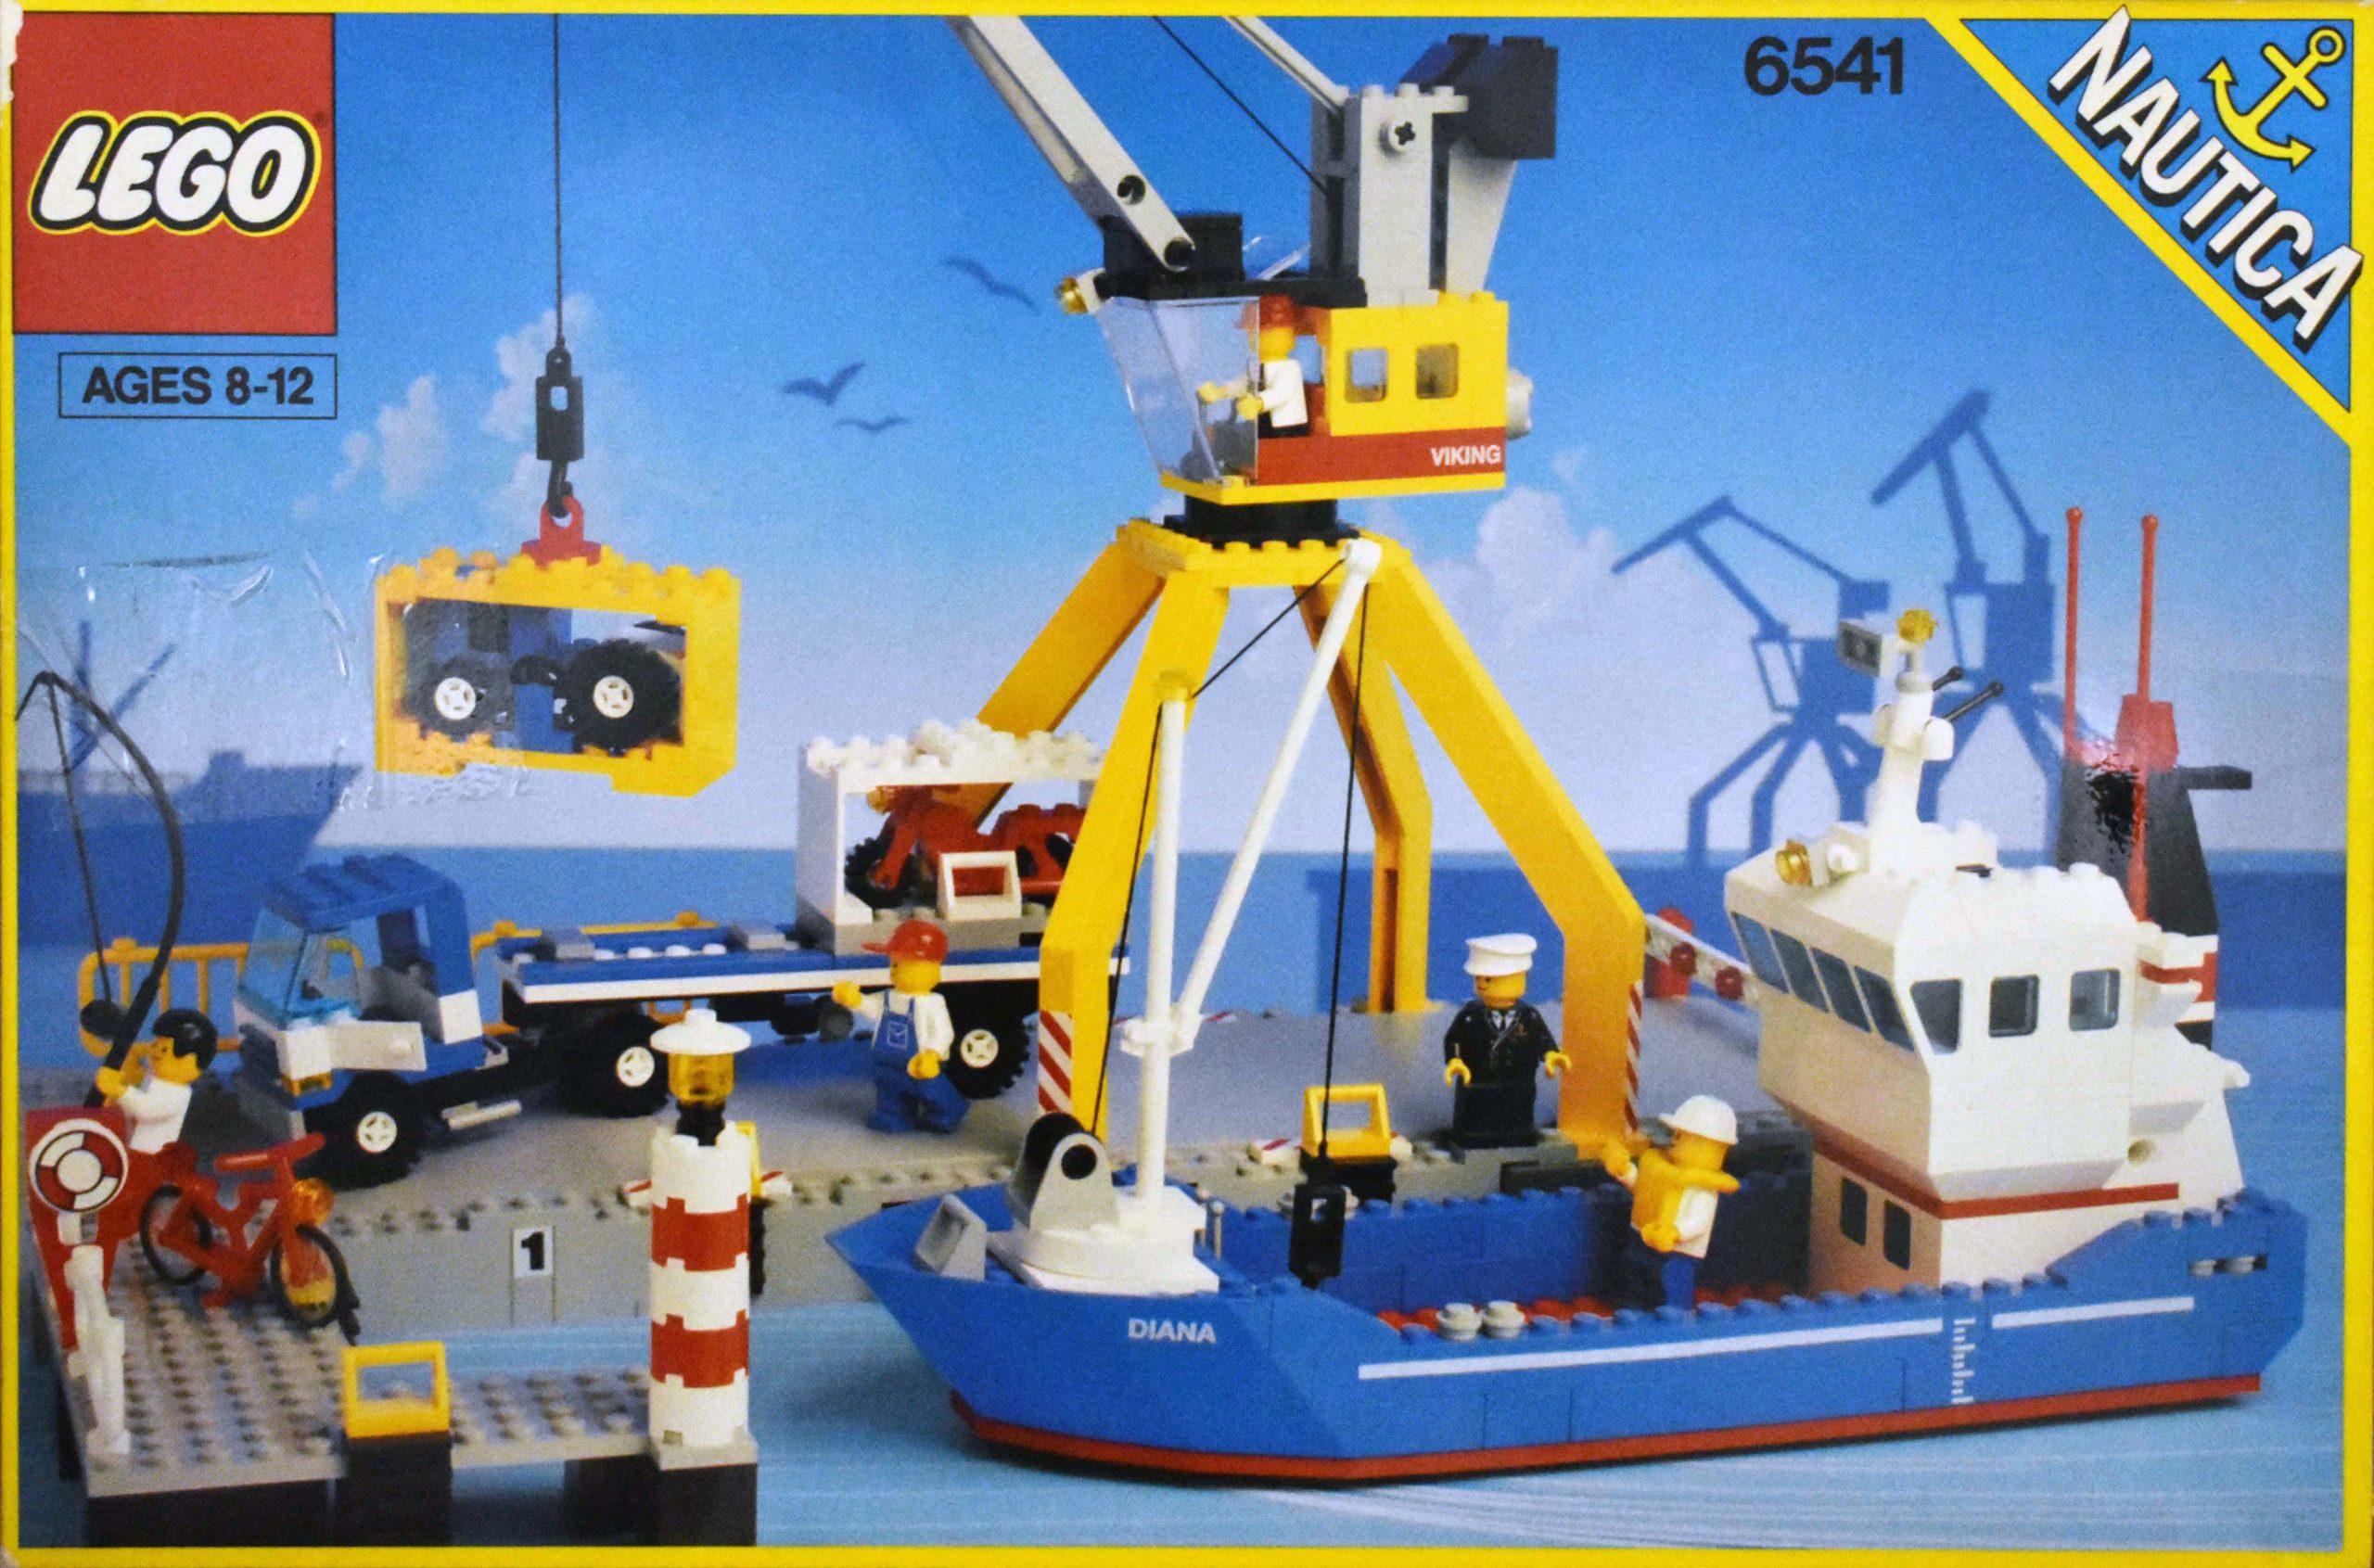 6541: Intercoastal Seaport